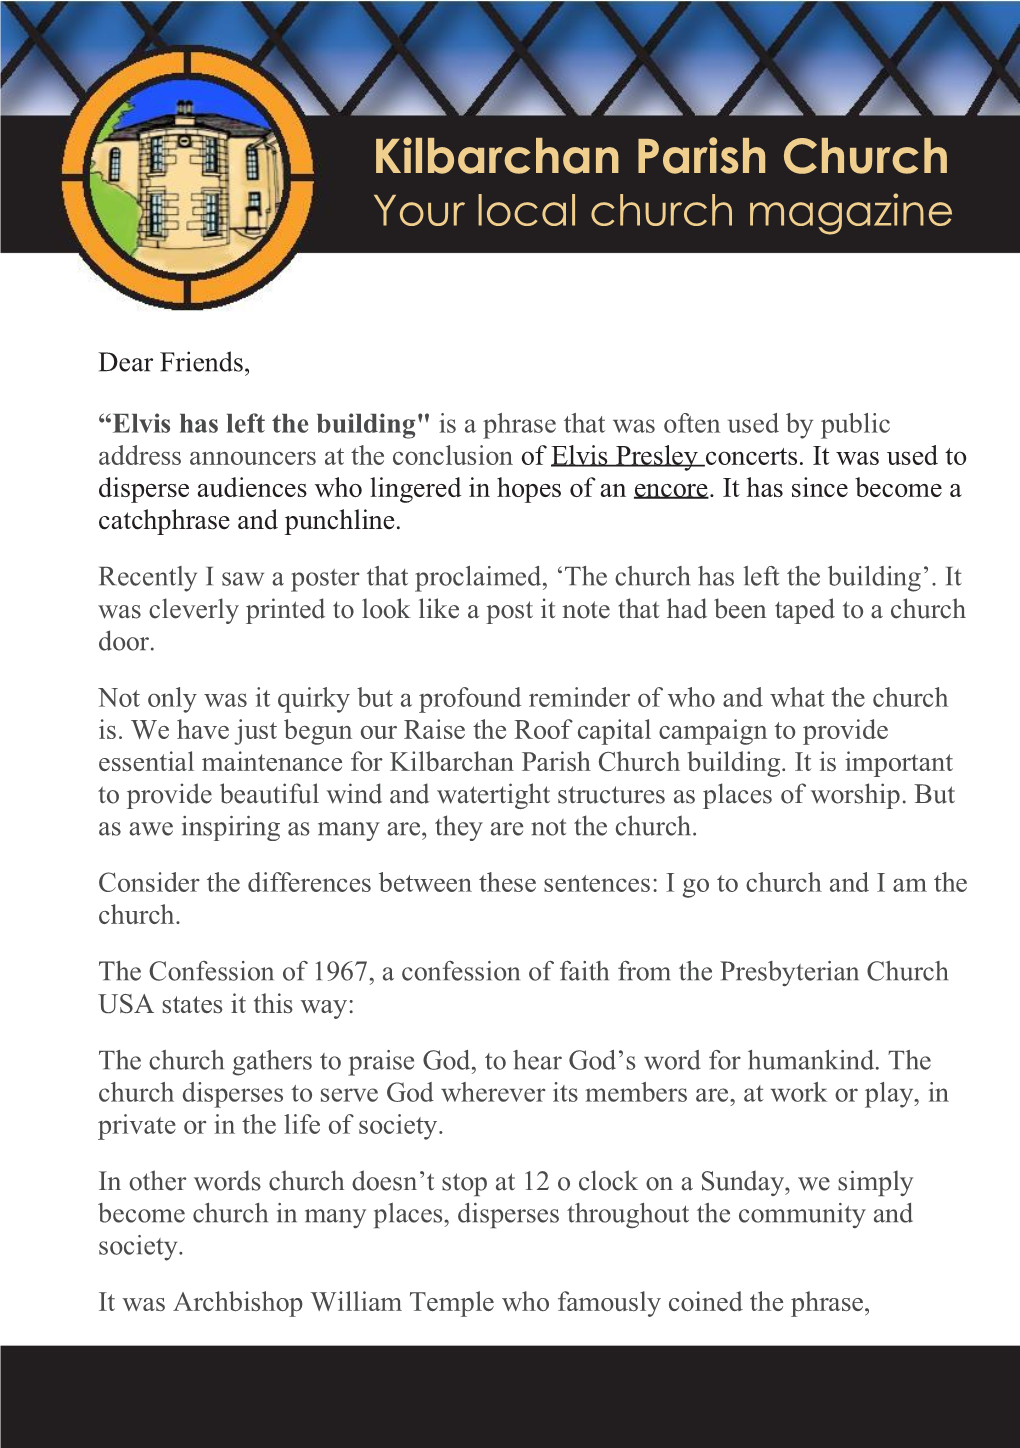 Kilbarchan Parish Church Your Local Church Magazine